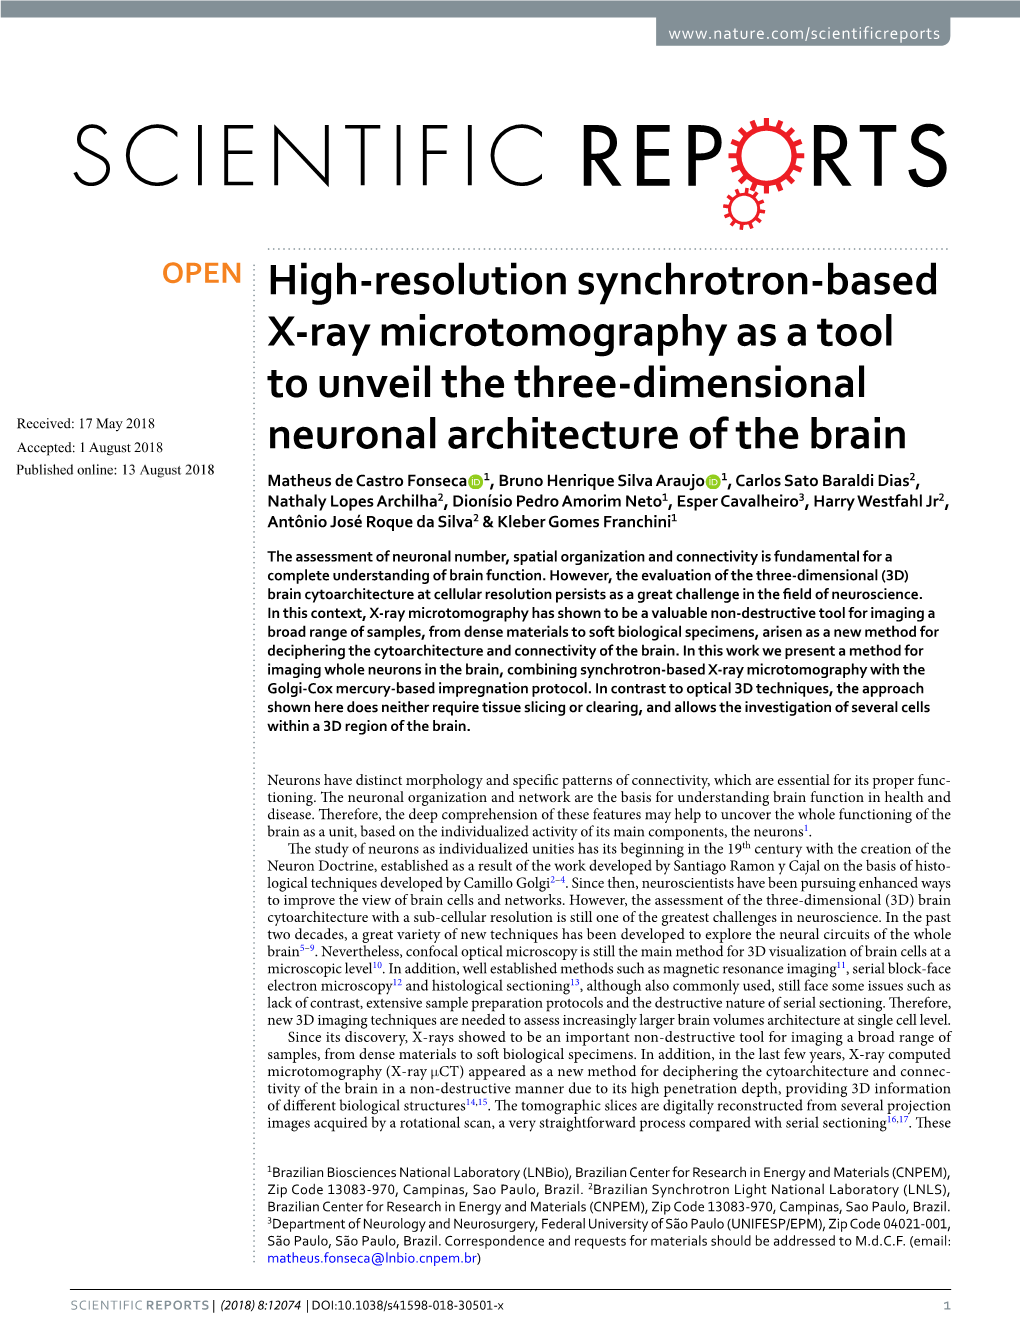 High-Resolution Synchrotron-Based X-Ray Microtomography As a Tool To